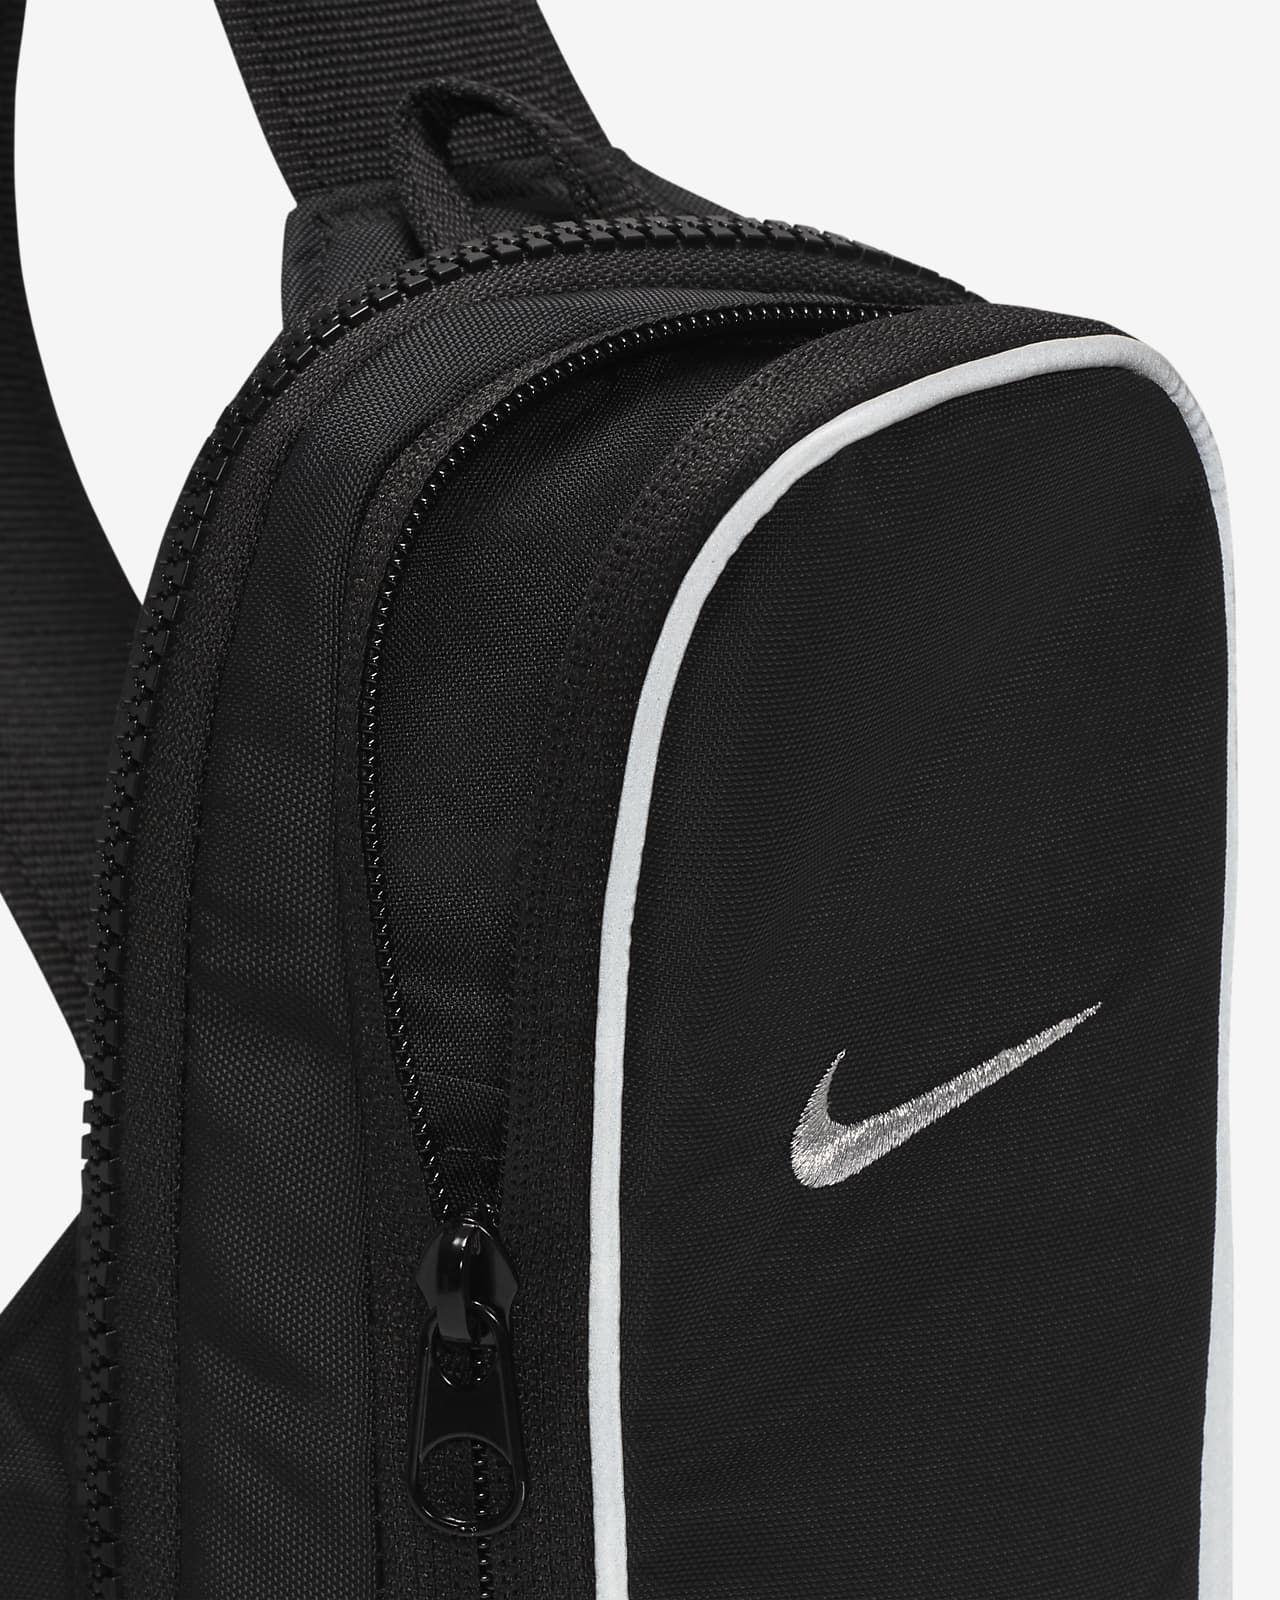 Buy Nike Body Bag Online In India -  India